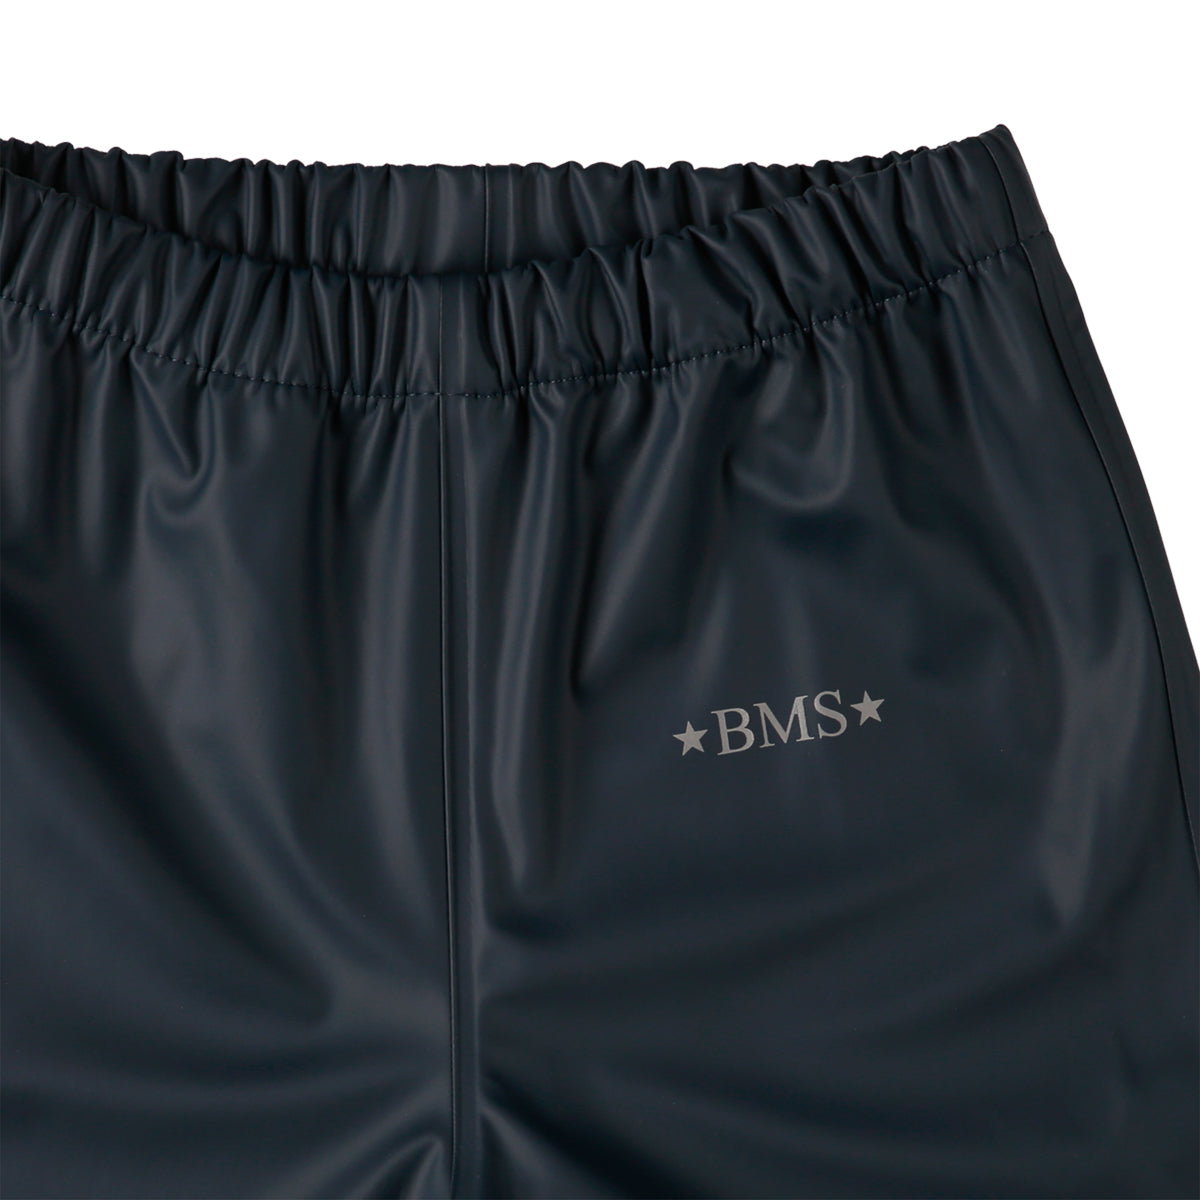 BMS Child Softskin Rain Pants with Elastic Waist Band - SALE - 50% 0FF